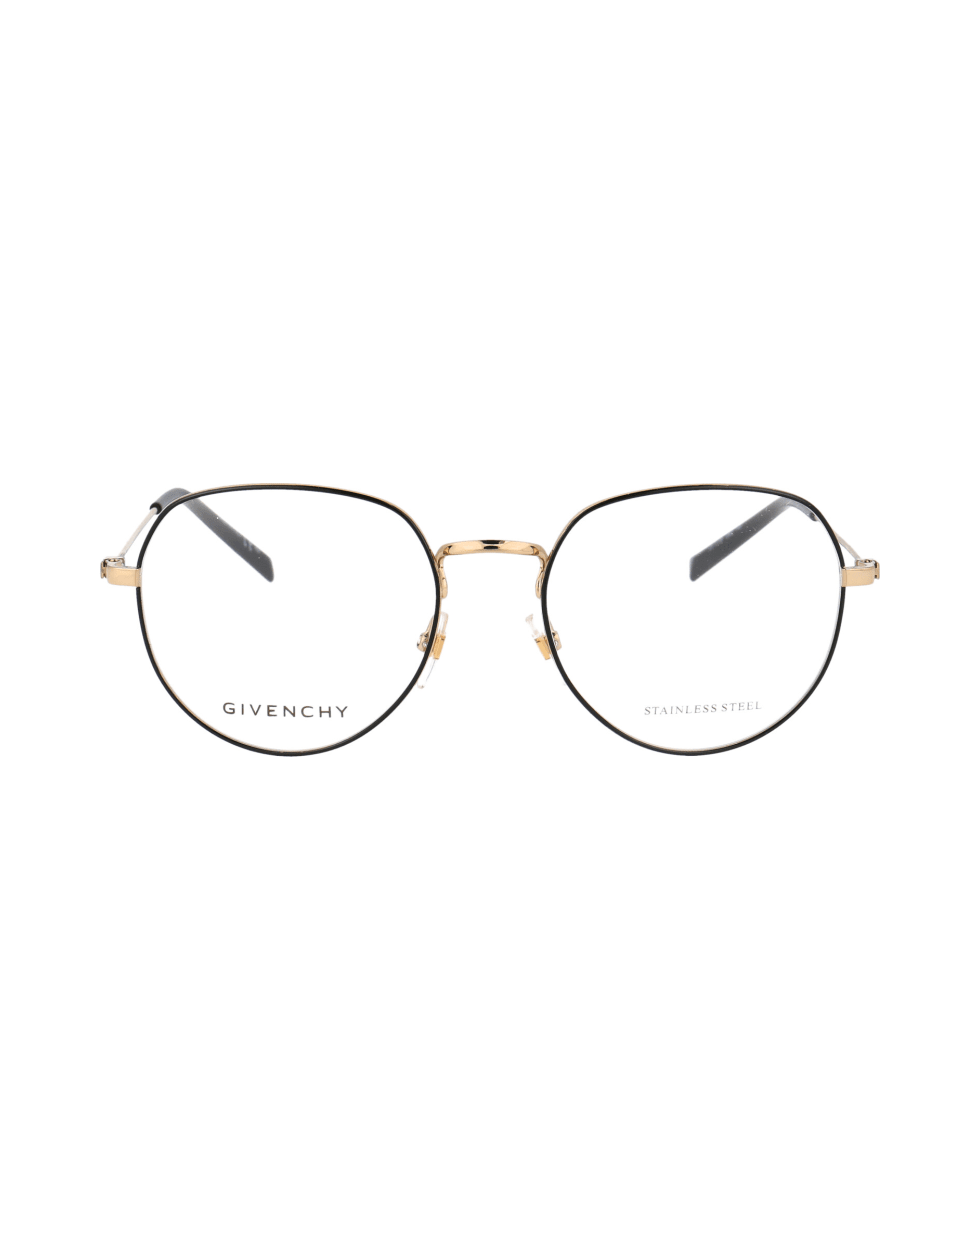 Givenchy Eyewear Gv 0138 Glasses - 2M2 BLK GOLD B